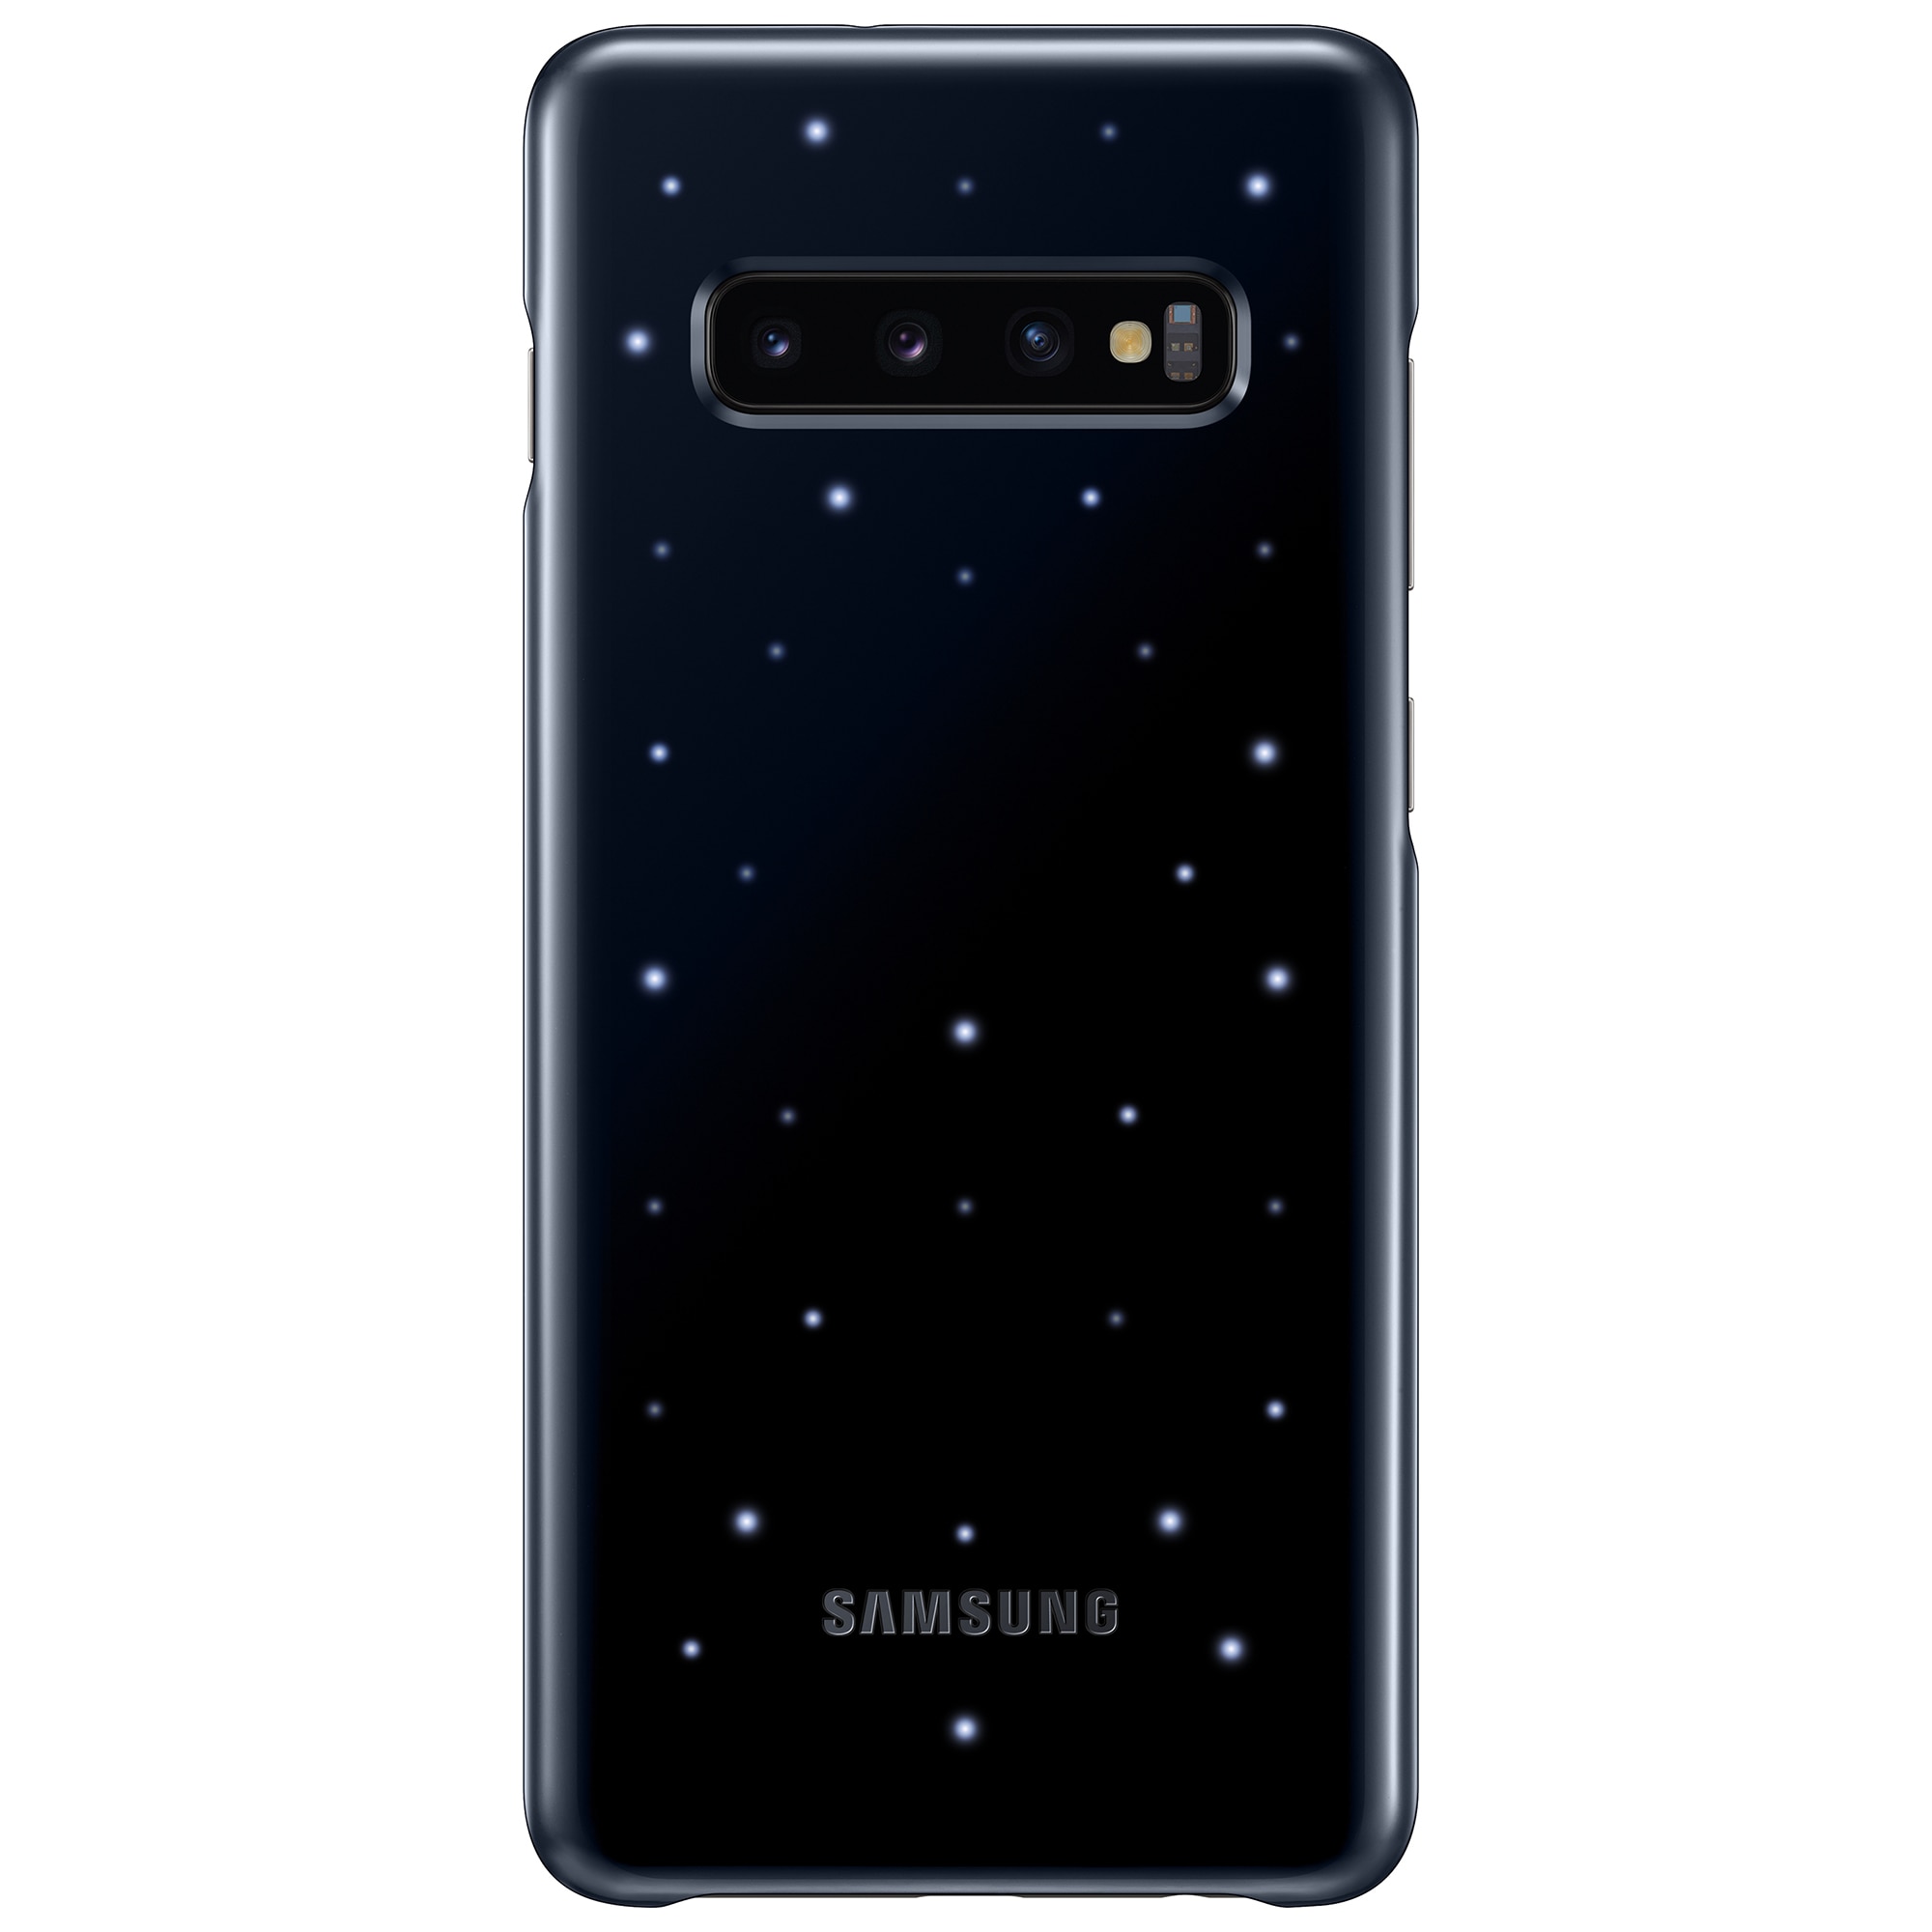 Enroll Refurbishment Billion Husa de protectie Samsung LED pentru Galaxy S10 Plus G975, Black - eMAG.ro